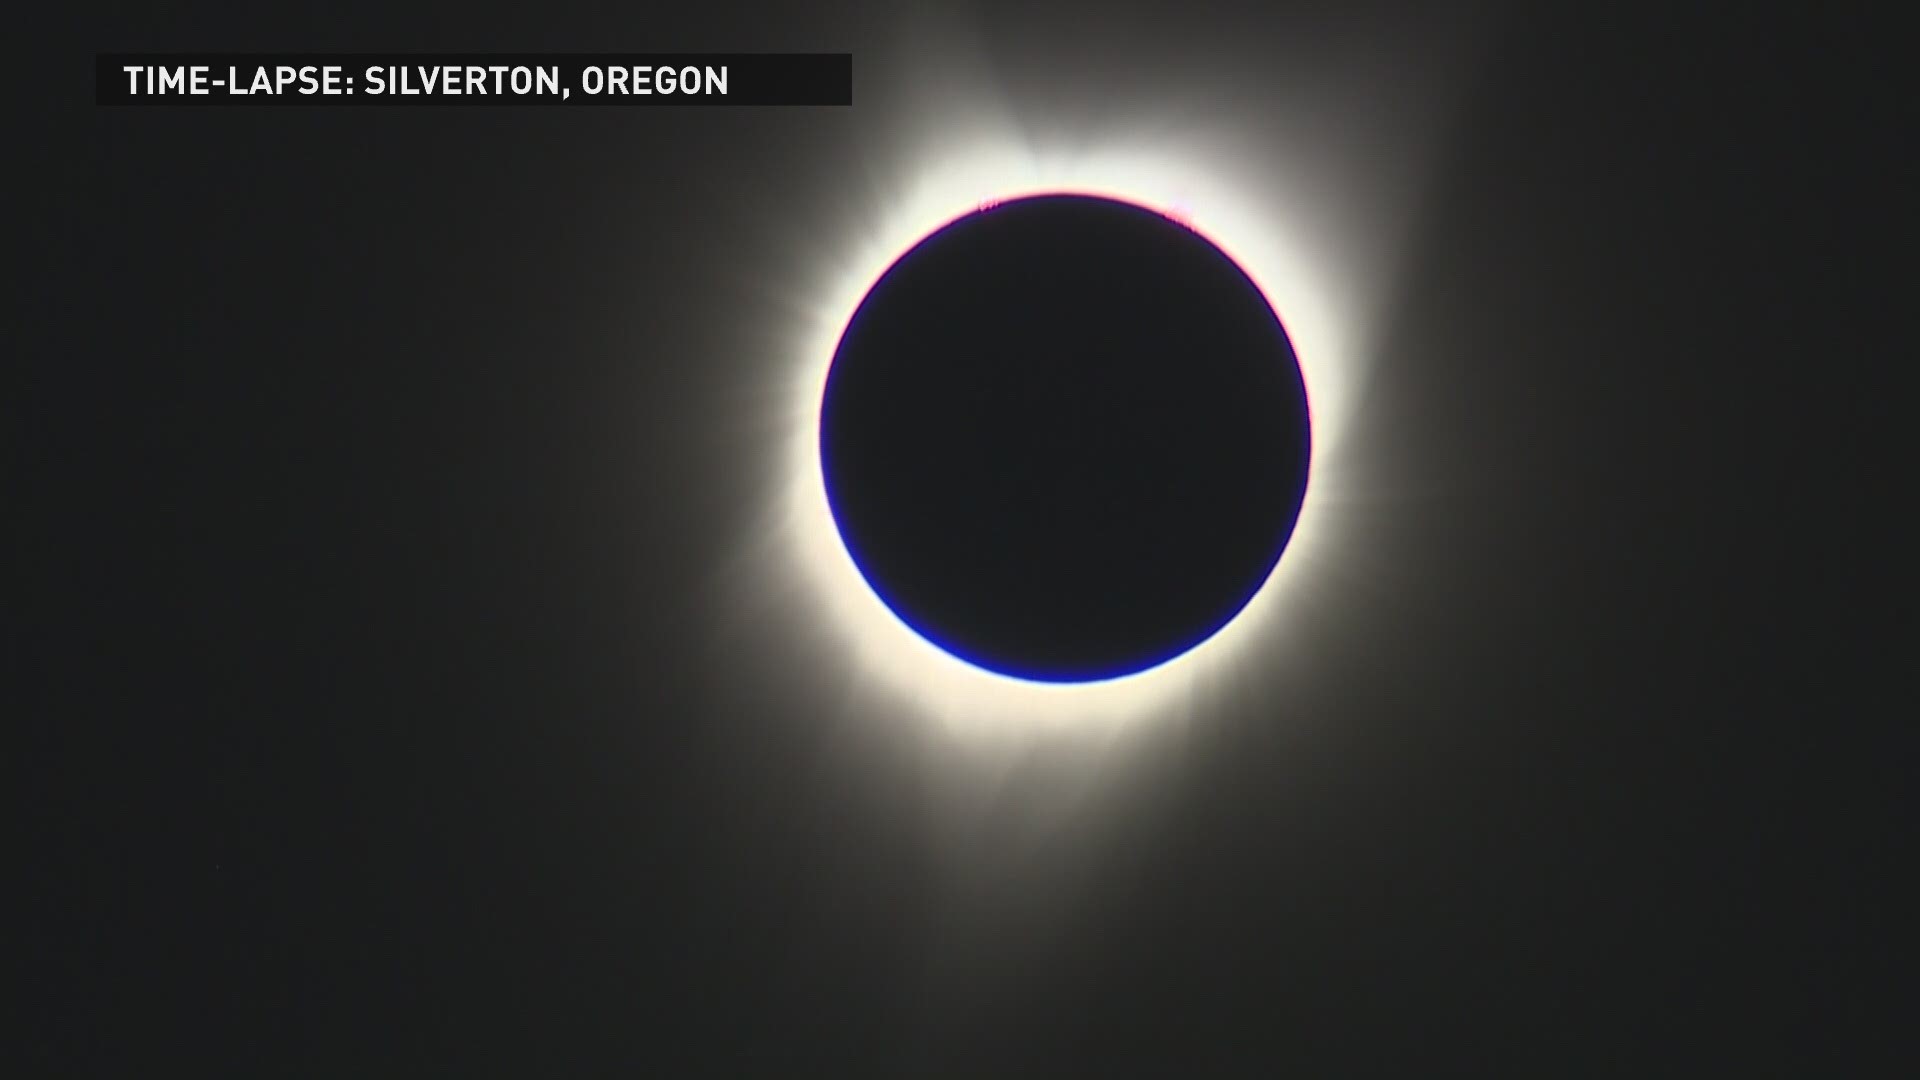 Timelapse of total solar eclipse over Silverton, Oregon on Aug. 21, 2017